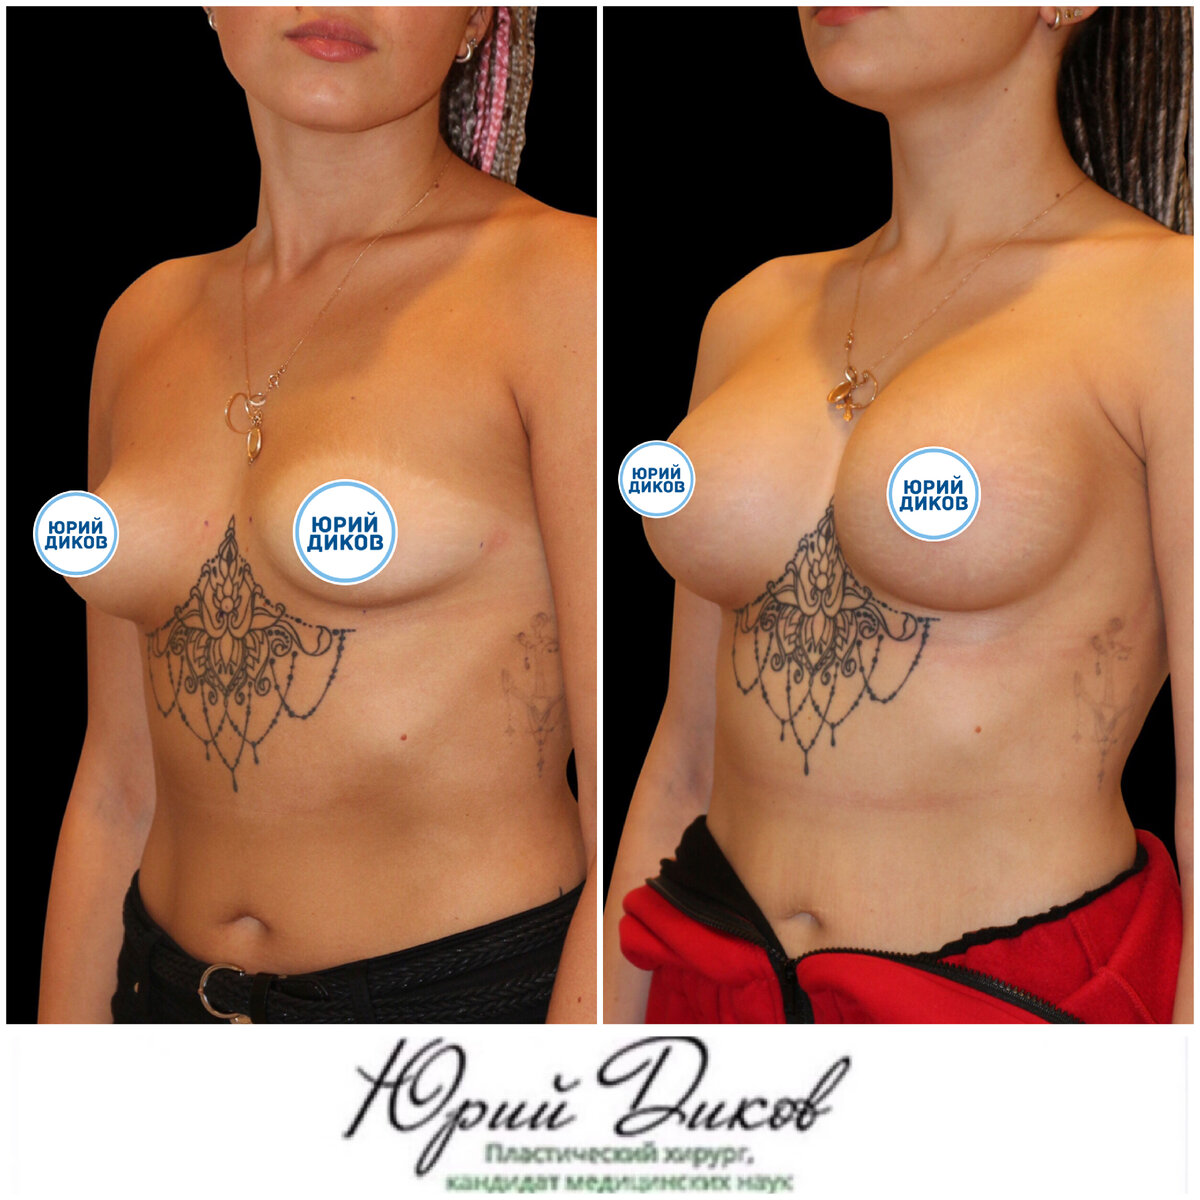 тубулярная деформация груди у женщин фото 89